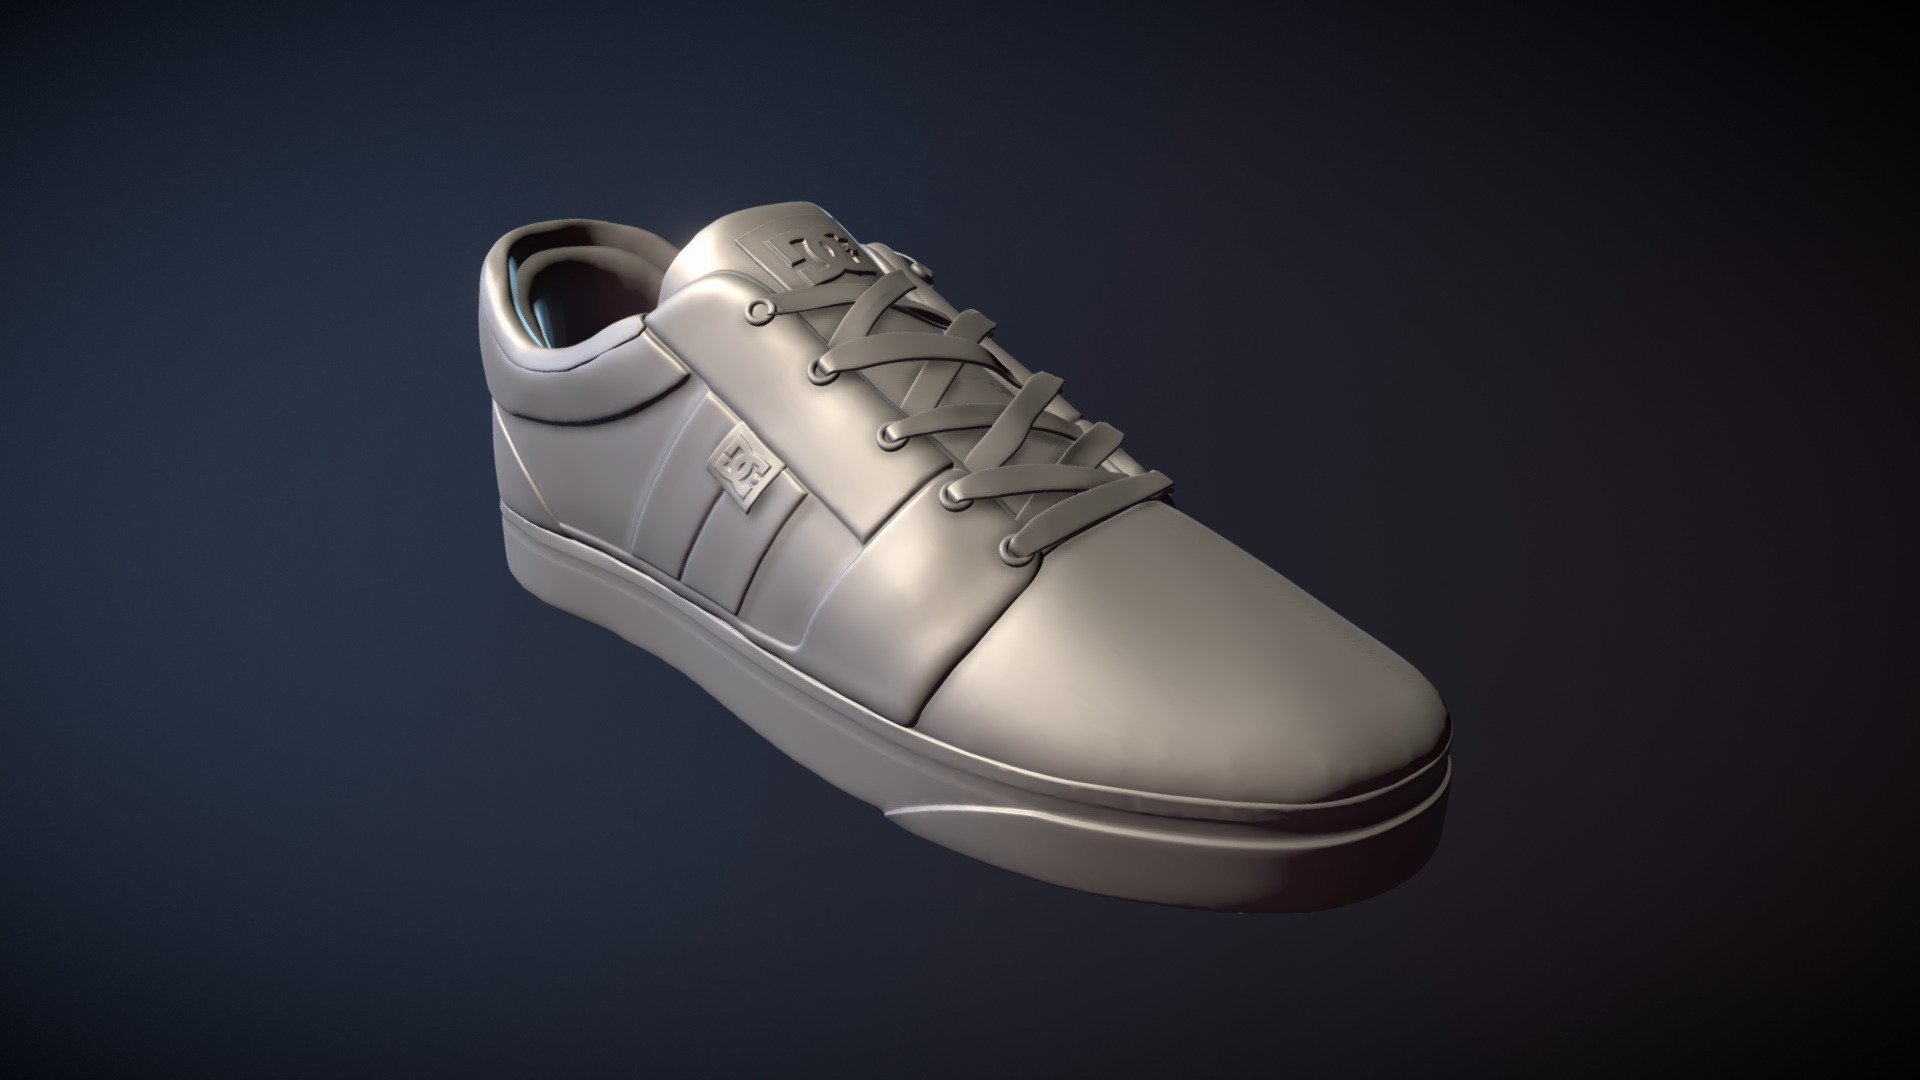 3D model of the shoes, im modelling a longboarder, hope u like it! - DC Shoes Sketch - 3D model by Alvaro Wagner (@Distroierd) 3d model